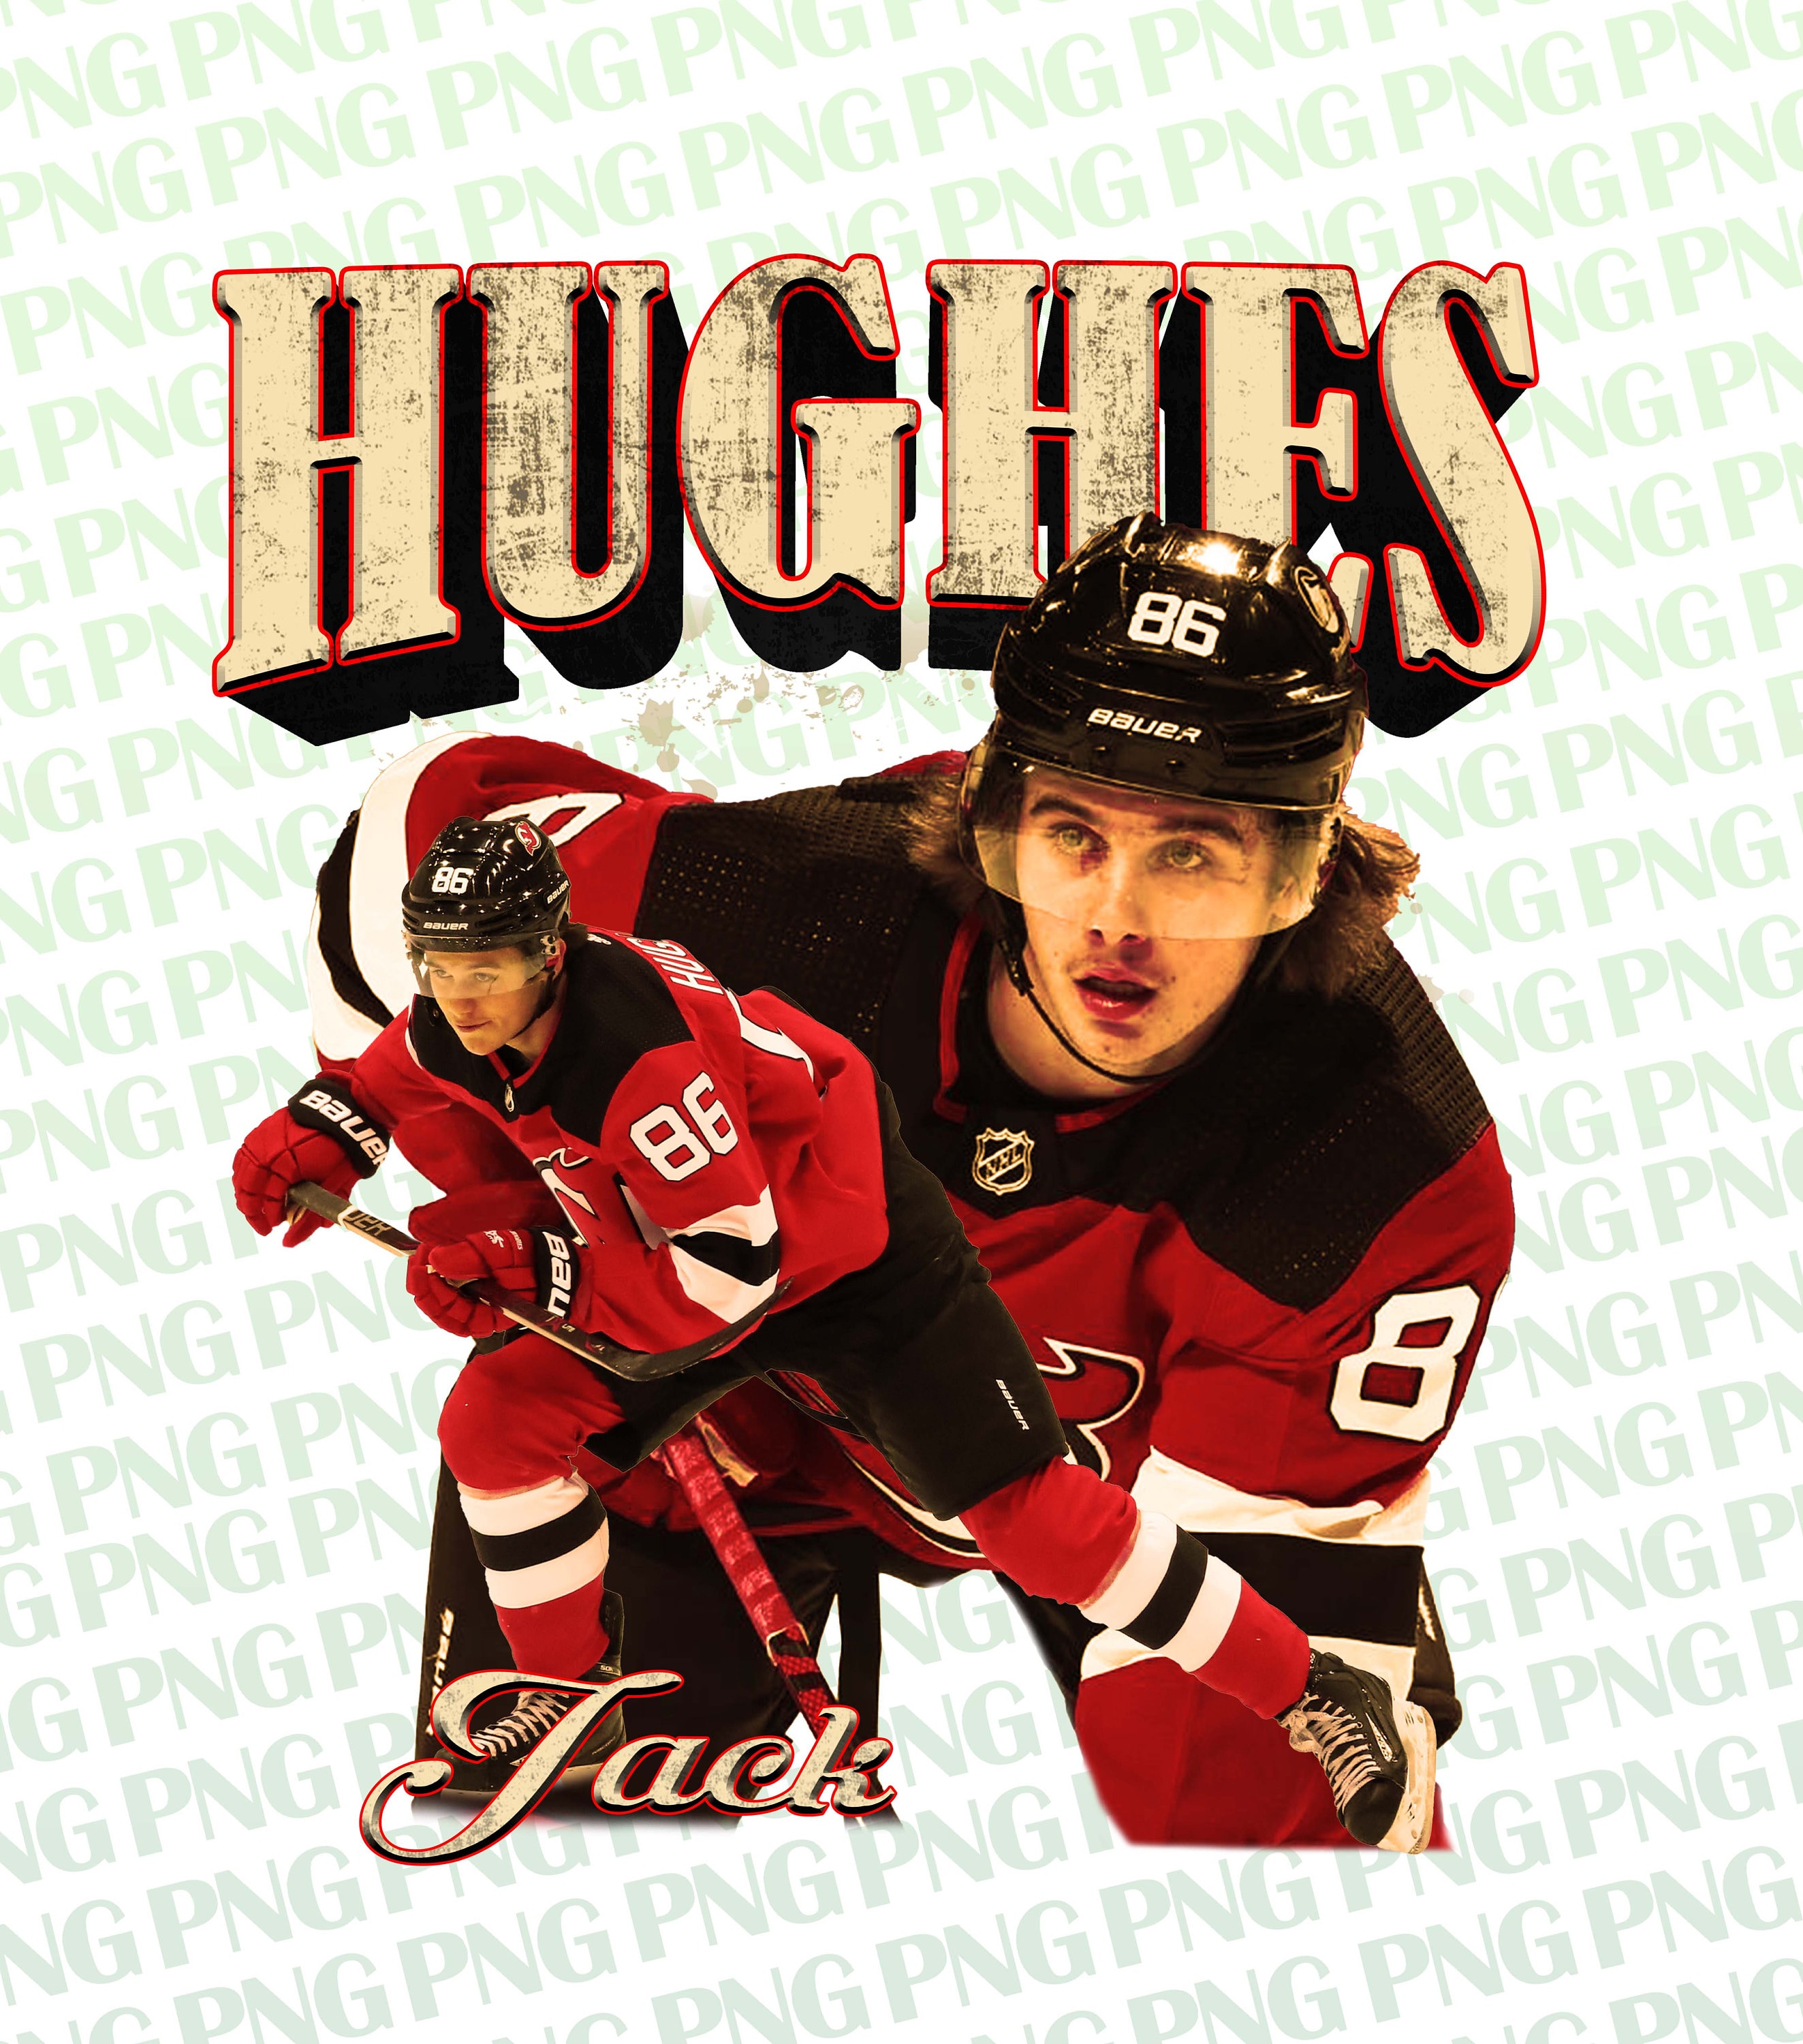 New Jersey Devils Hoodie 3D Jack Hughes 86 Jersey Devils Gift